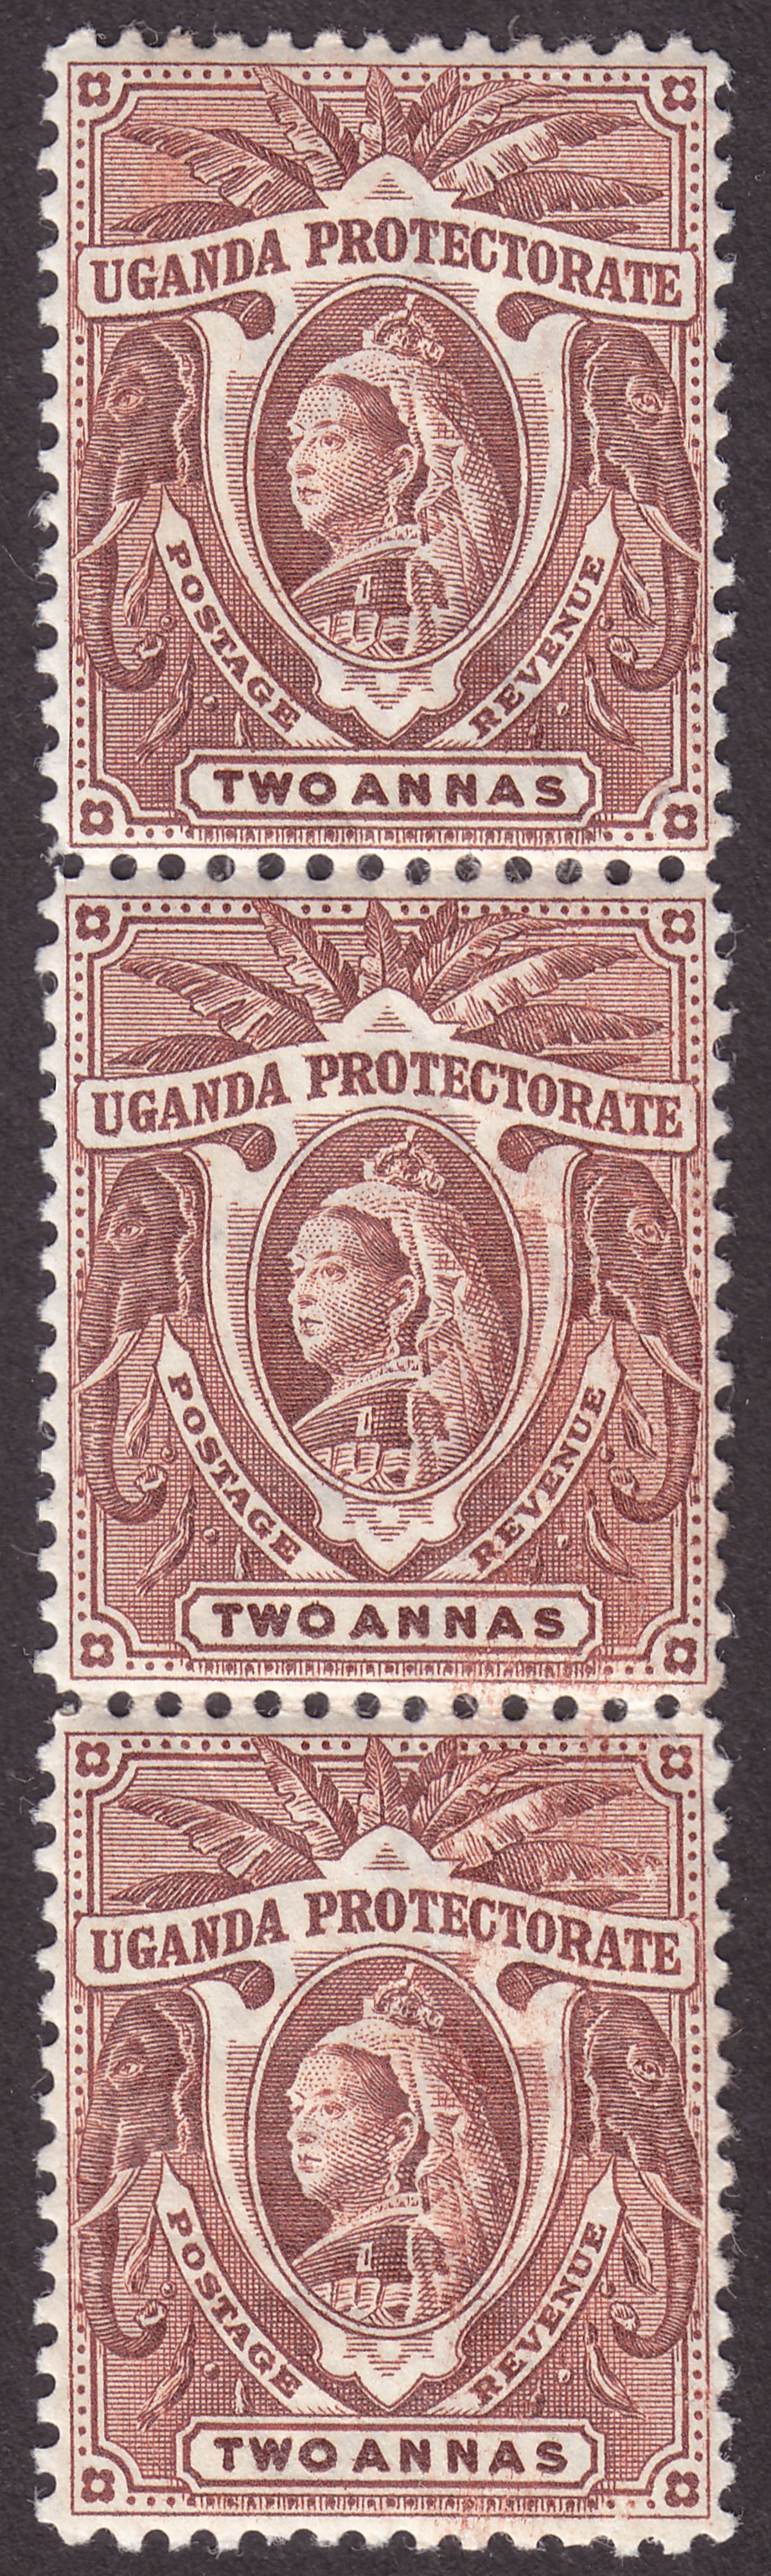 Uganda Protectorate 1898 QV 2a Red-Brown Strip of 3 Mint SG86 cat £36